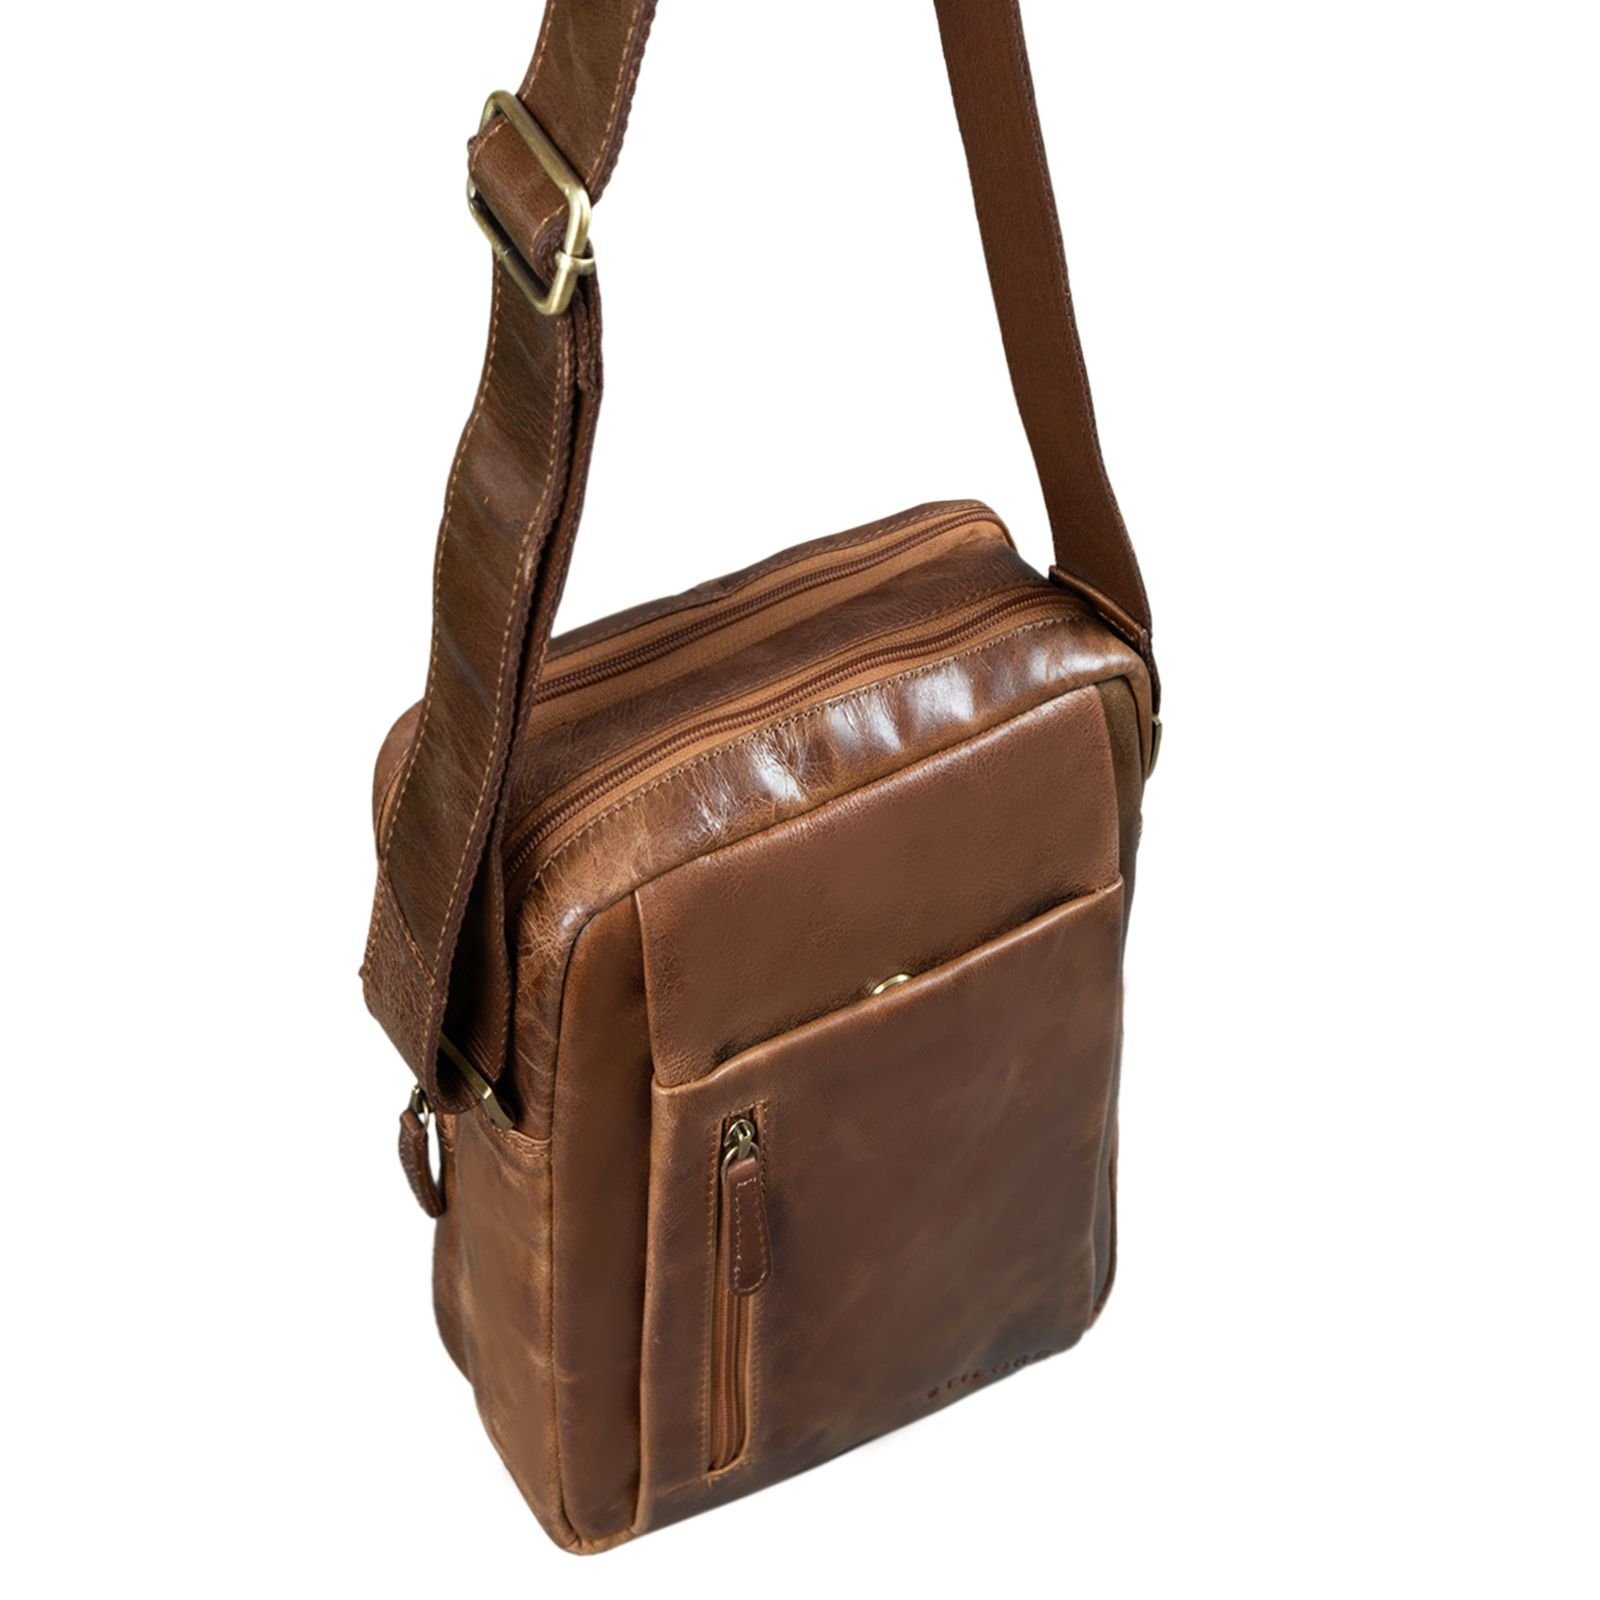 Tasche Leder STILORD "Irving" Vintage Klein Bag braun antik - Messenger